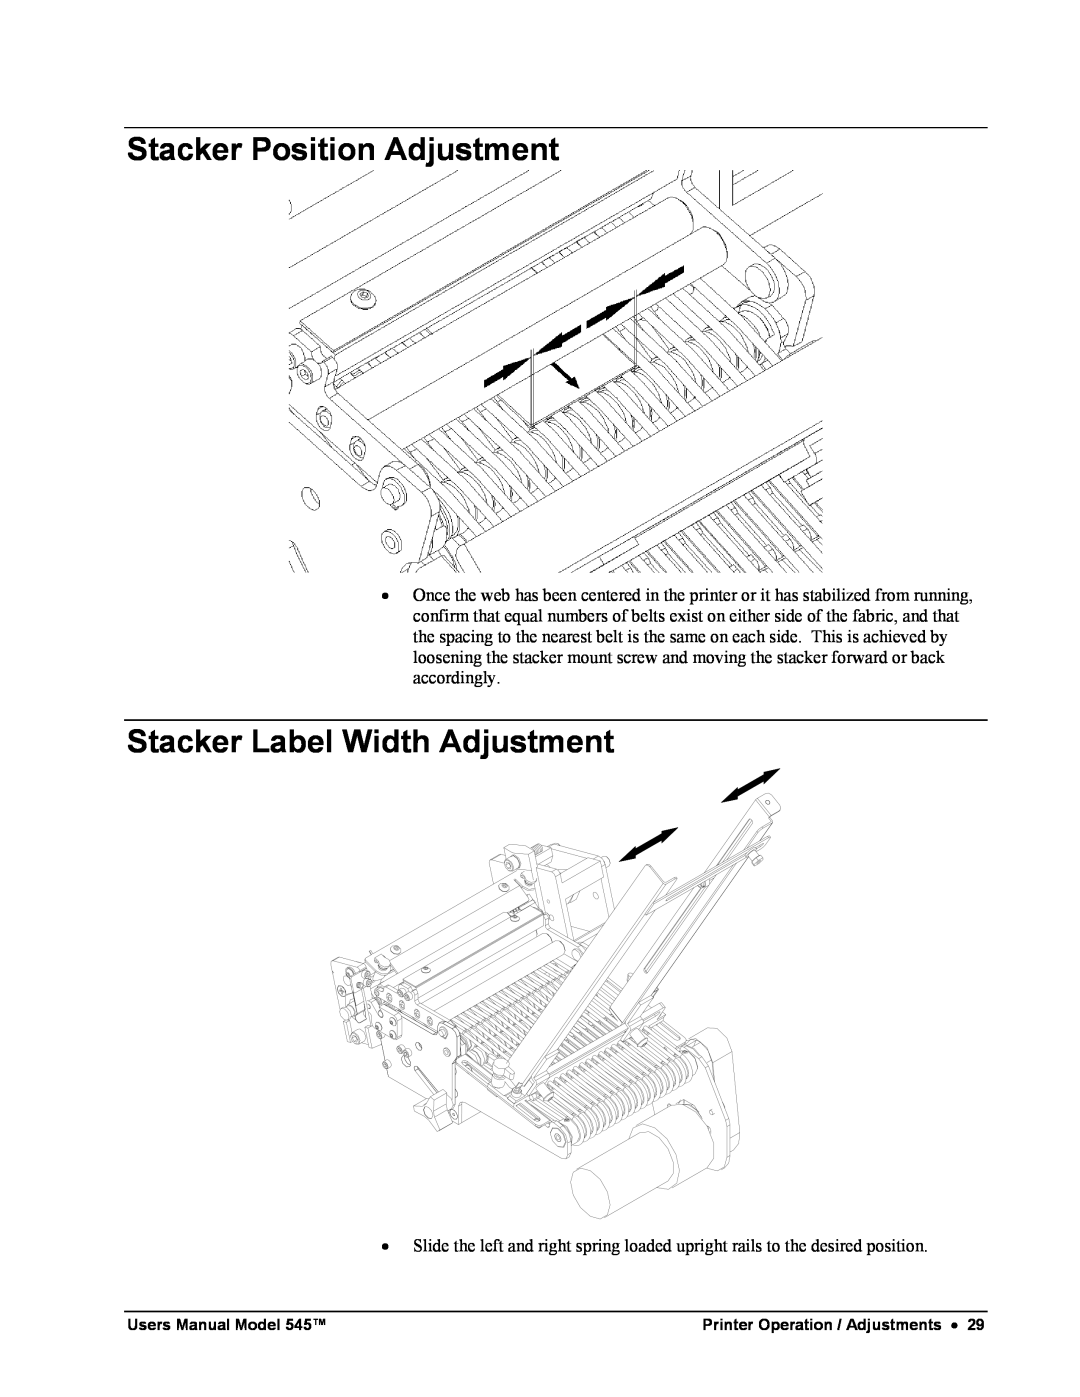 Paxar 545 user manual Stacker Position Adjustment, Stacker Label Width Adjustment 